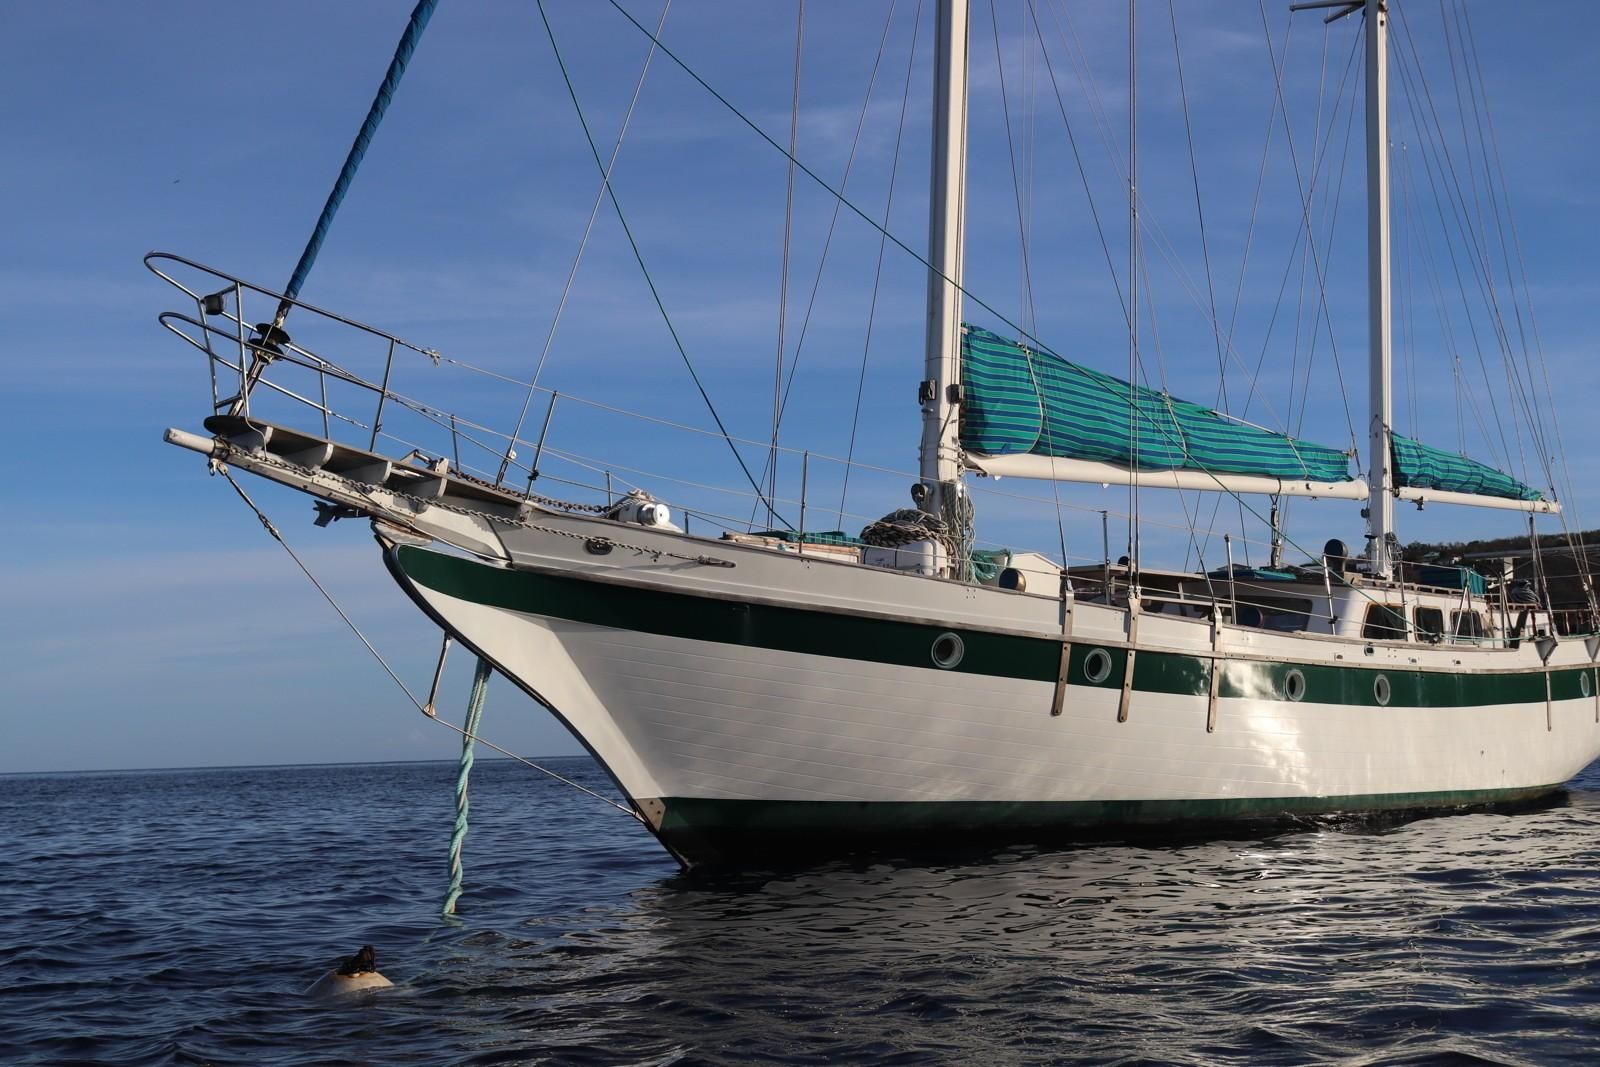 sailboats for sale michigan yachtworld